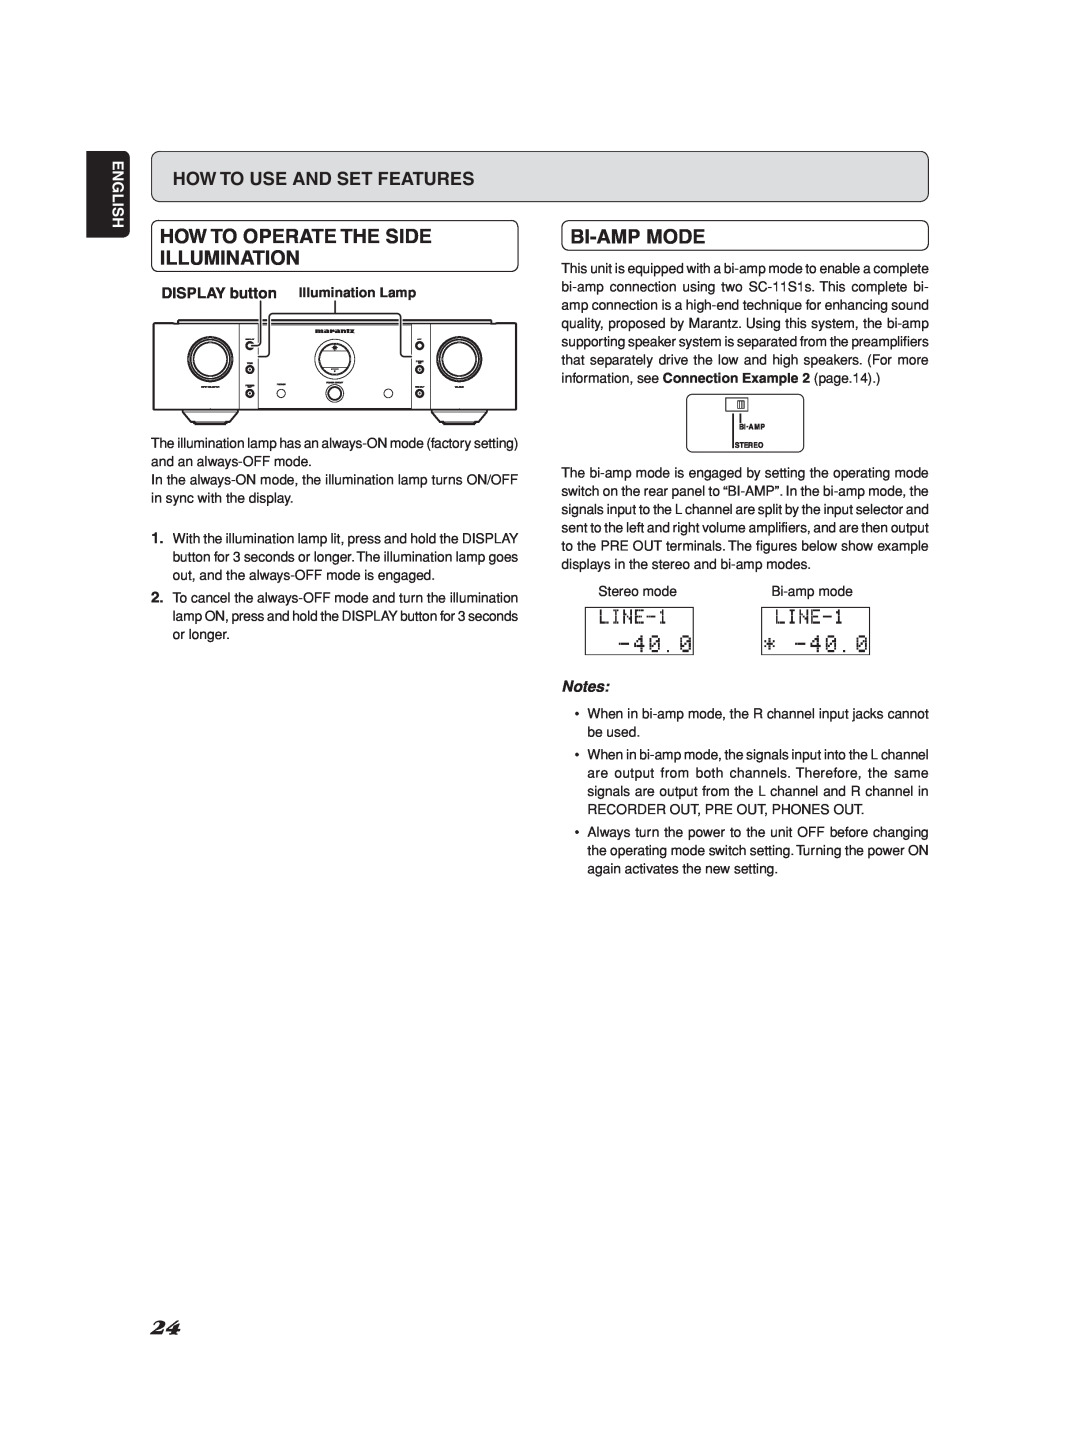 Marantz Model SC-11S1 manual How To Operate The Side Illumination, Bi-Ampmode, English, Illumination Lamp 